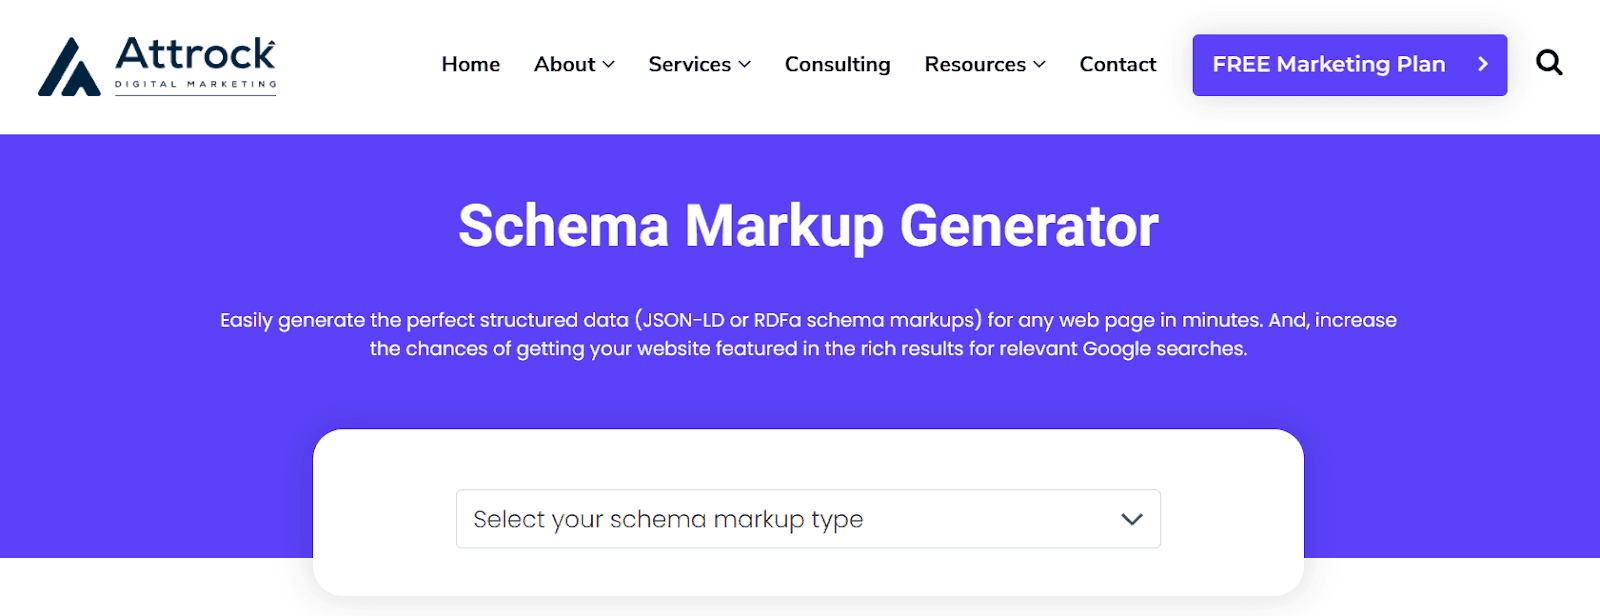 Schema Markup Generator - Free Tool